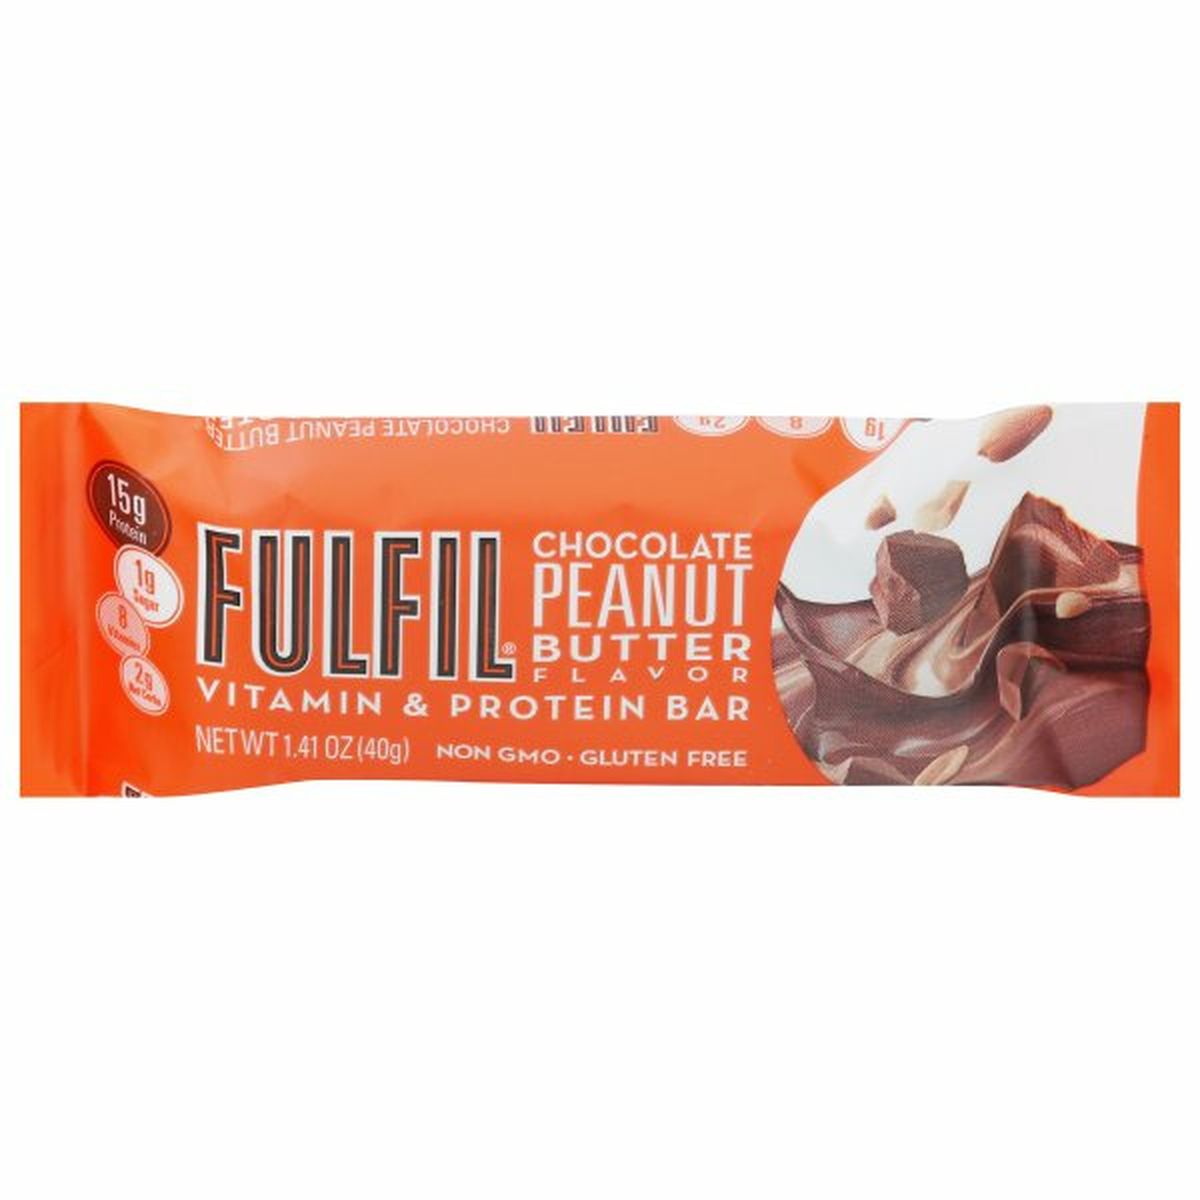 Calories in Fulfil Vitamin & Protein Bar, Chocolate Peanut Butter Flavor